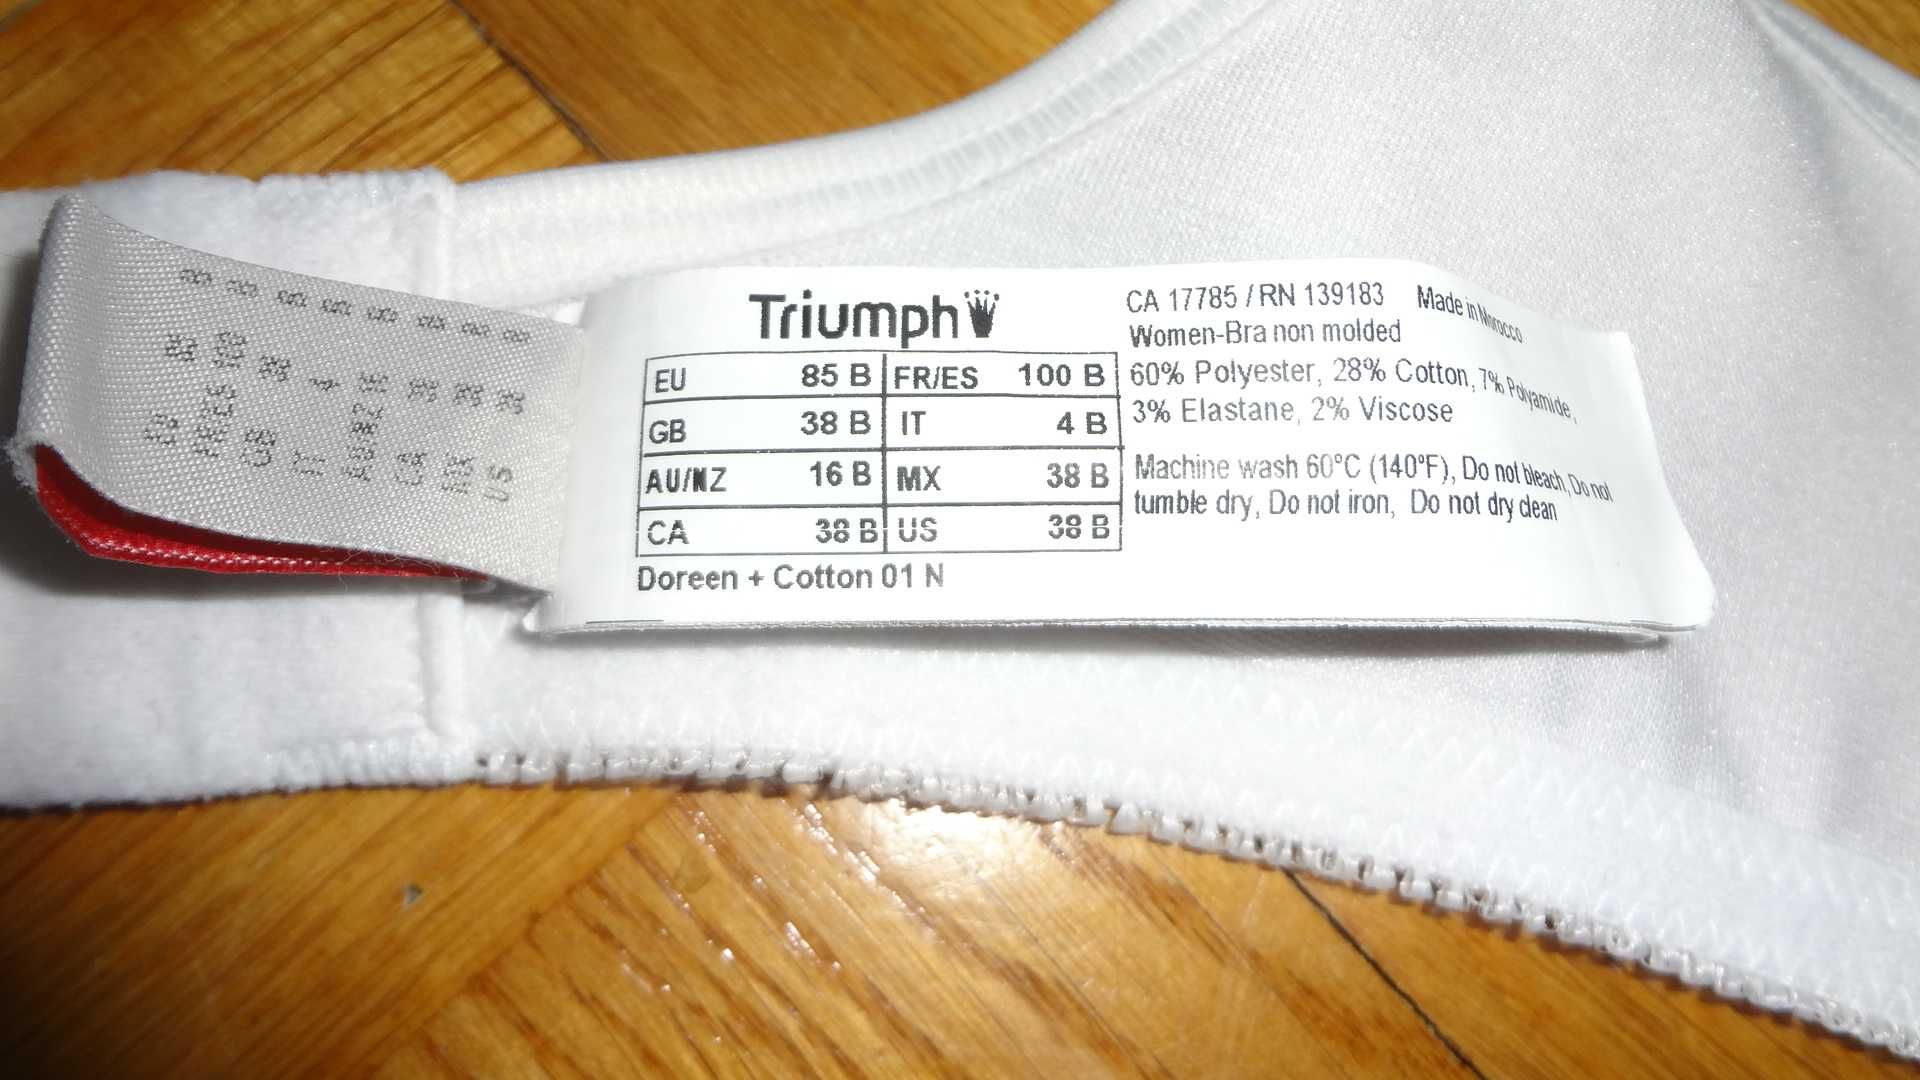 Biustonosz Triumph Doreen+Cotton 01N r.85B